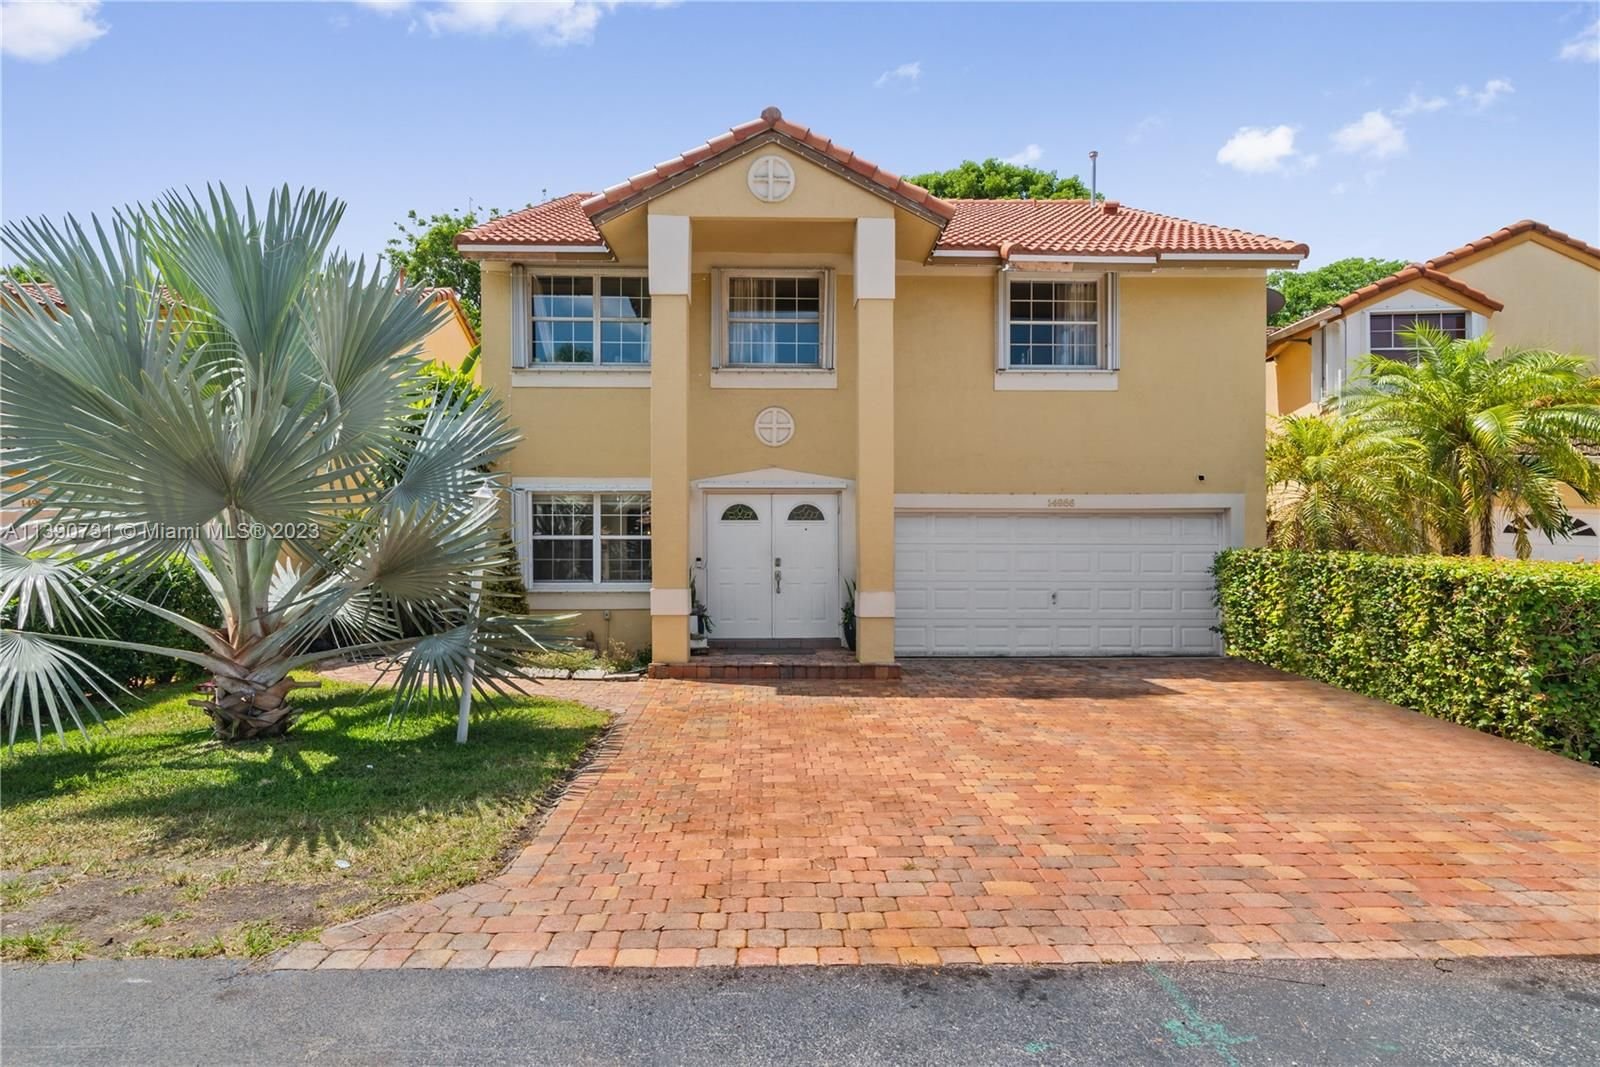 Real estate property located at 14986 113th St, Miami-Dade County, Miami, FL